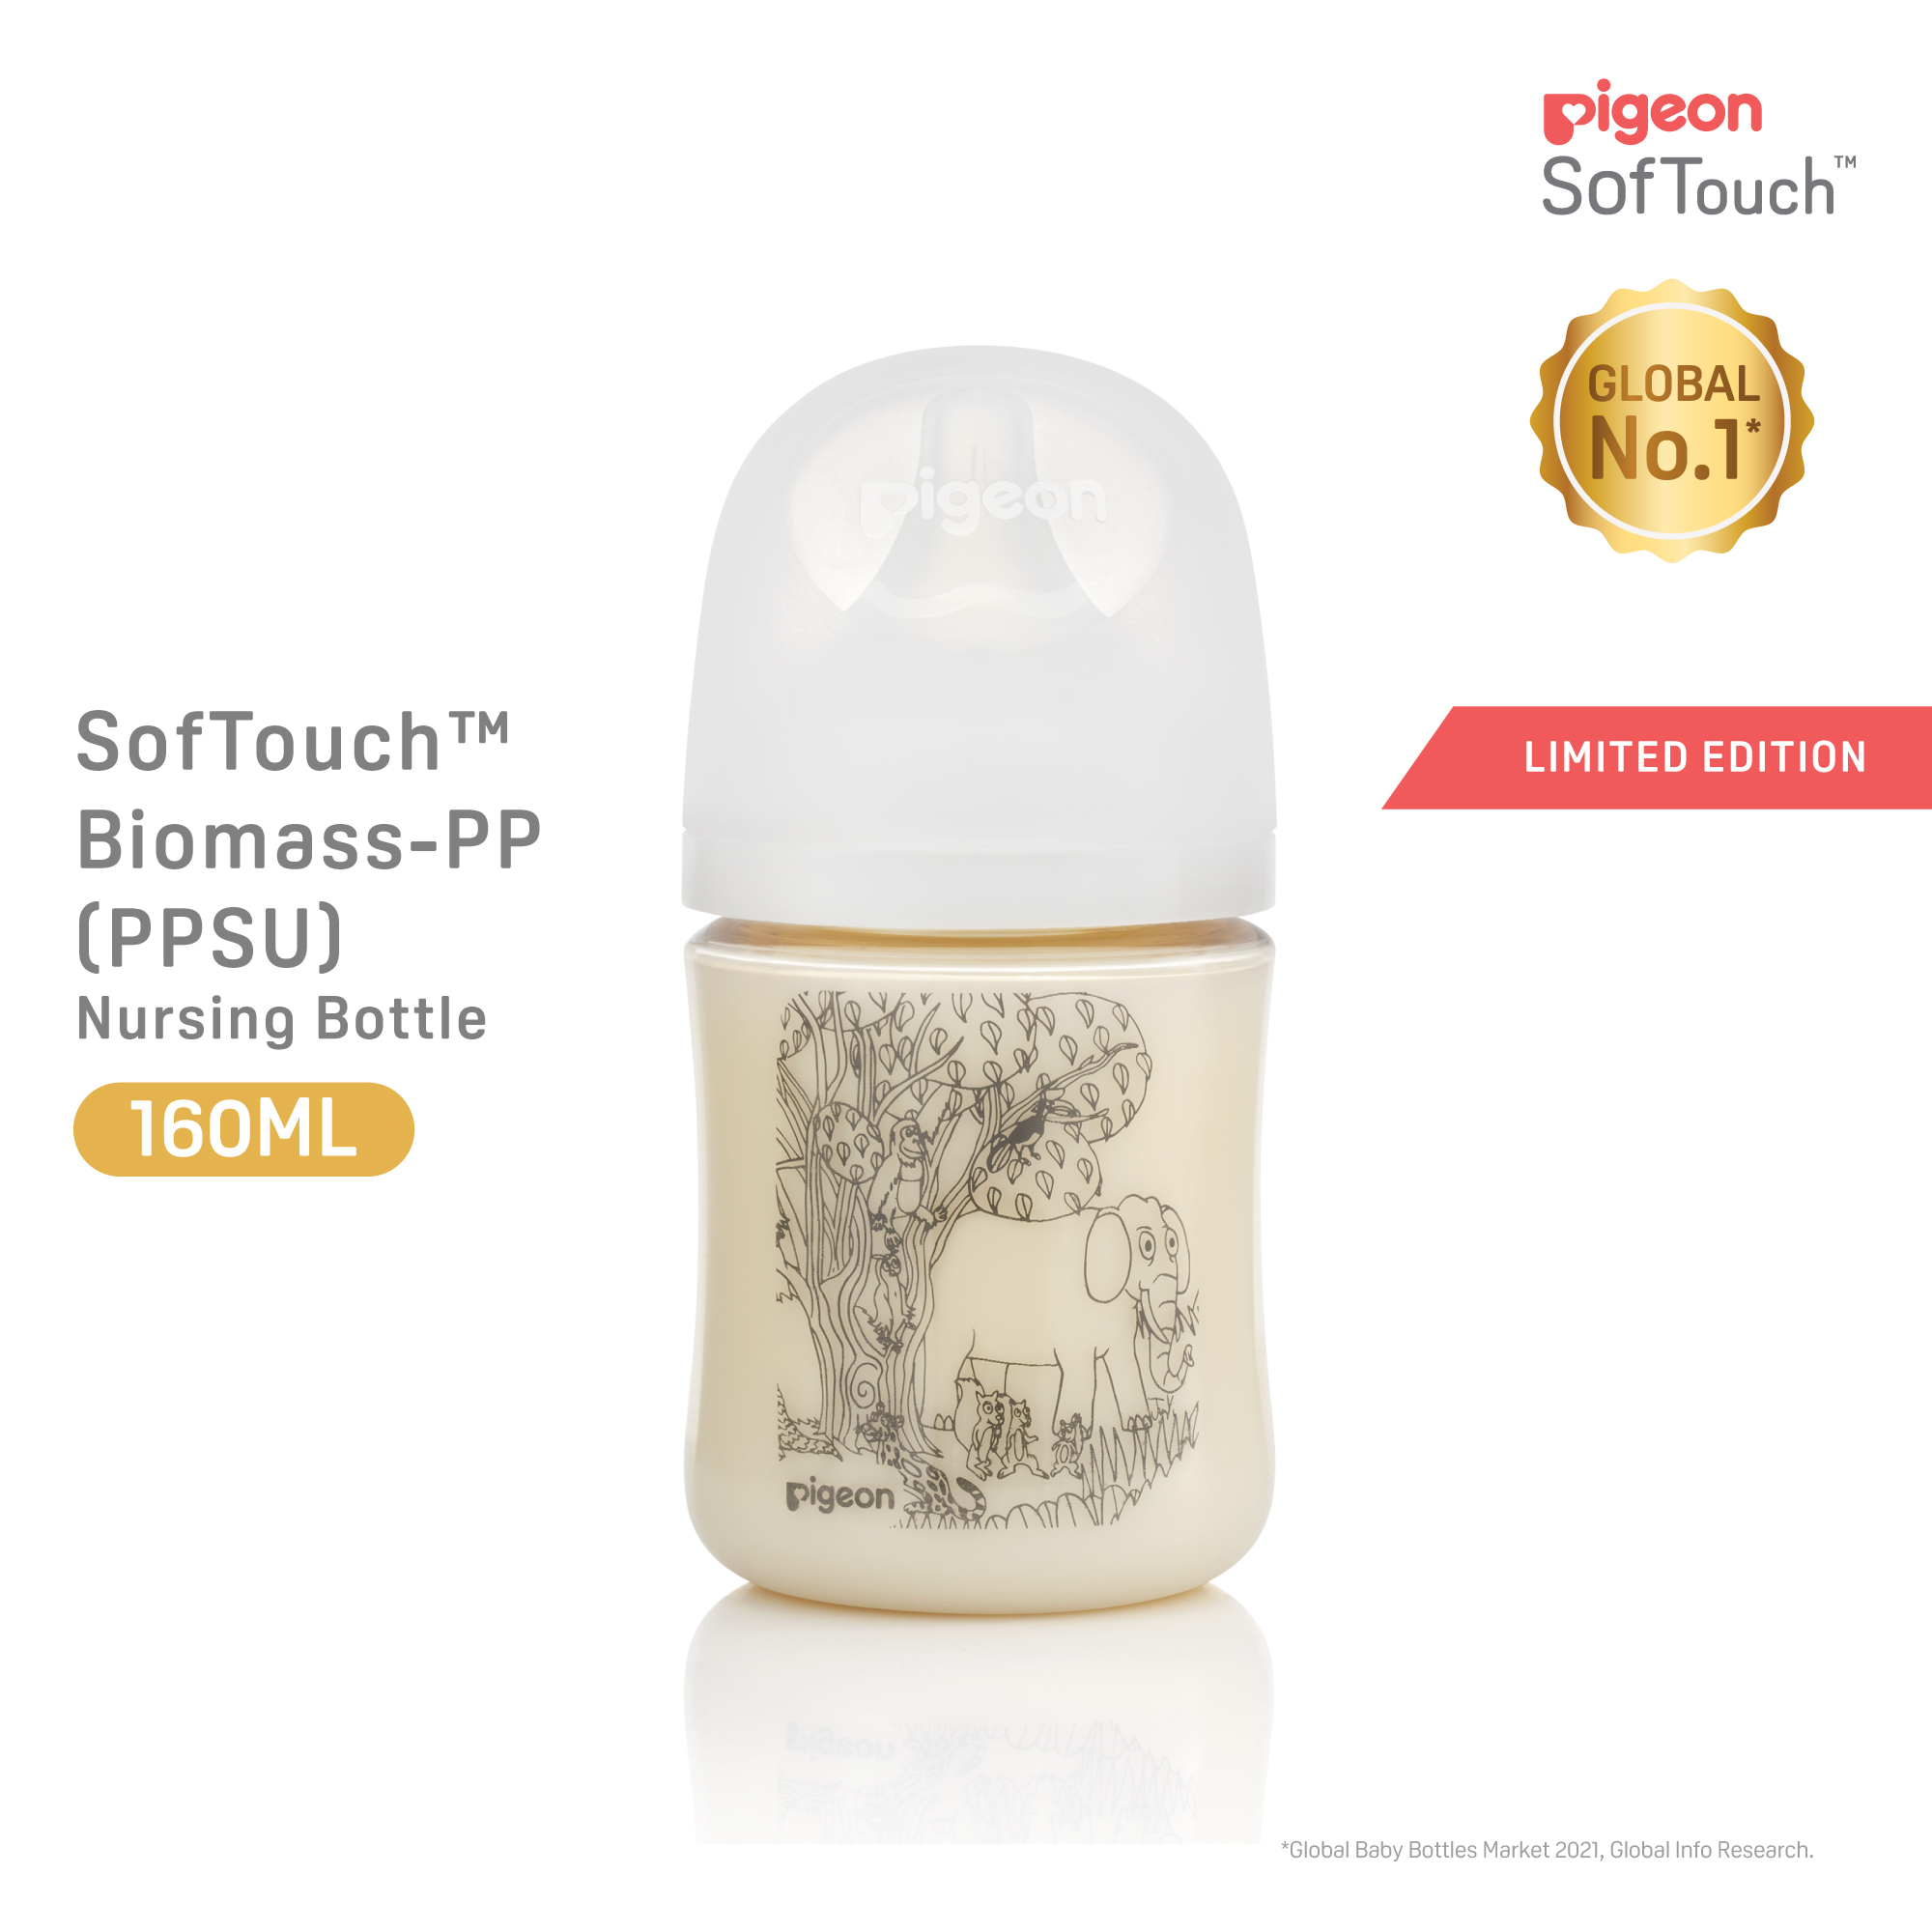 Pigeon SofTouch 3 Nursing Bottle PPSU 160ml (Bio-Mass PP) (PG-79795)